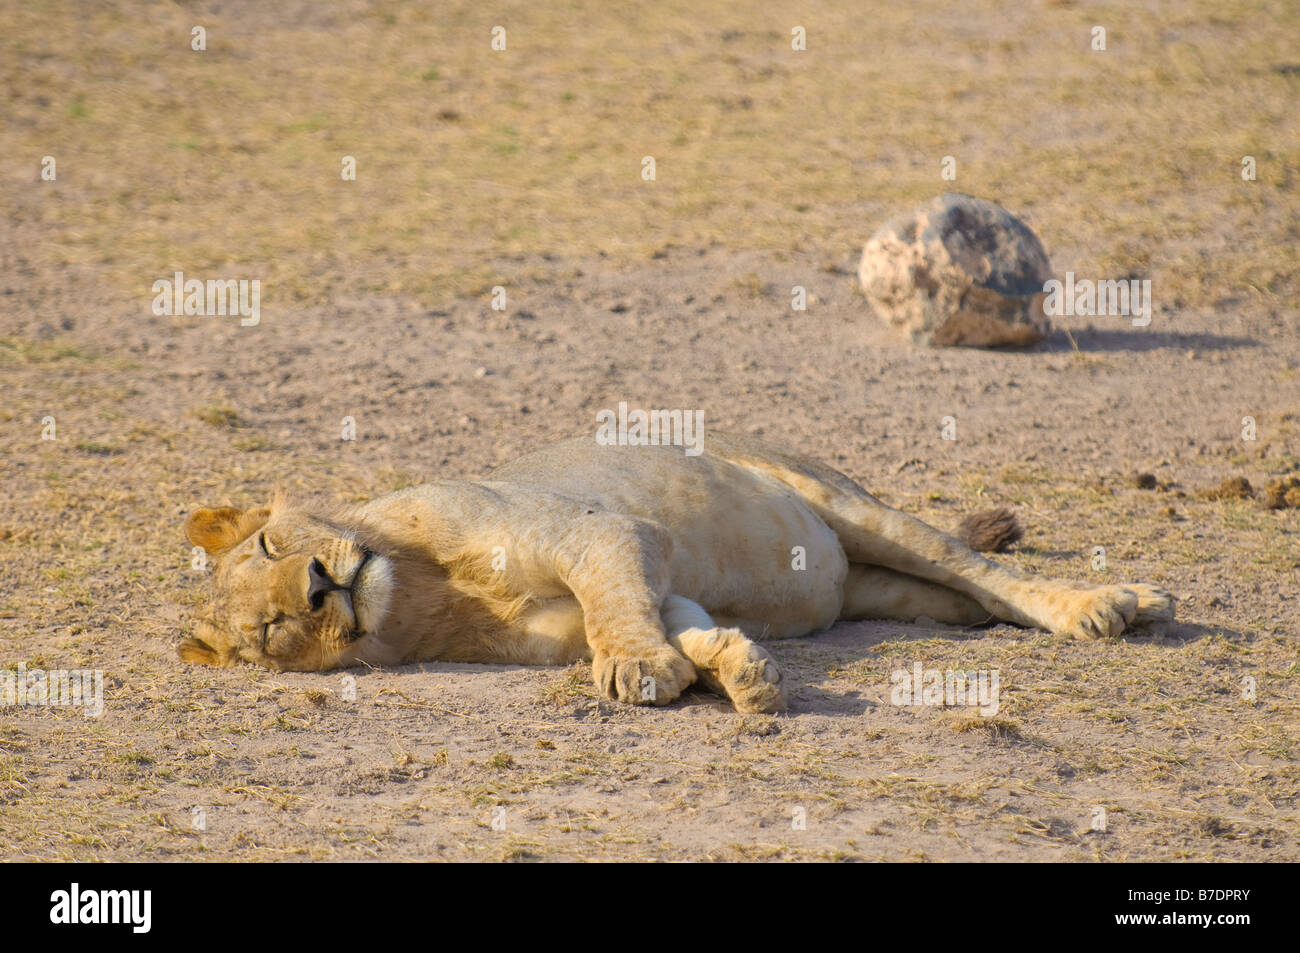 sleeping lion amboseli national park kenya Stock Photo